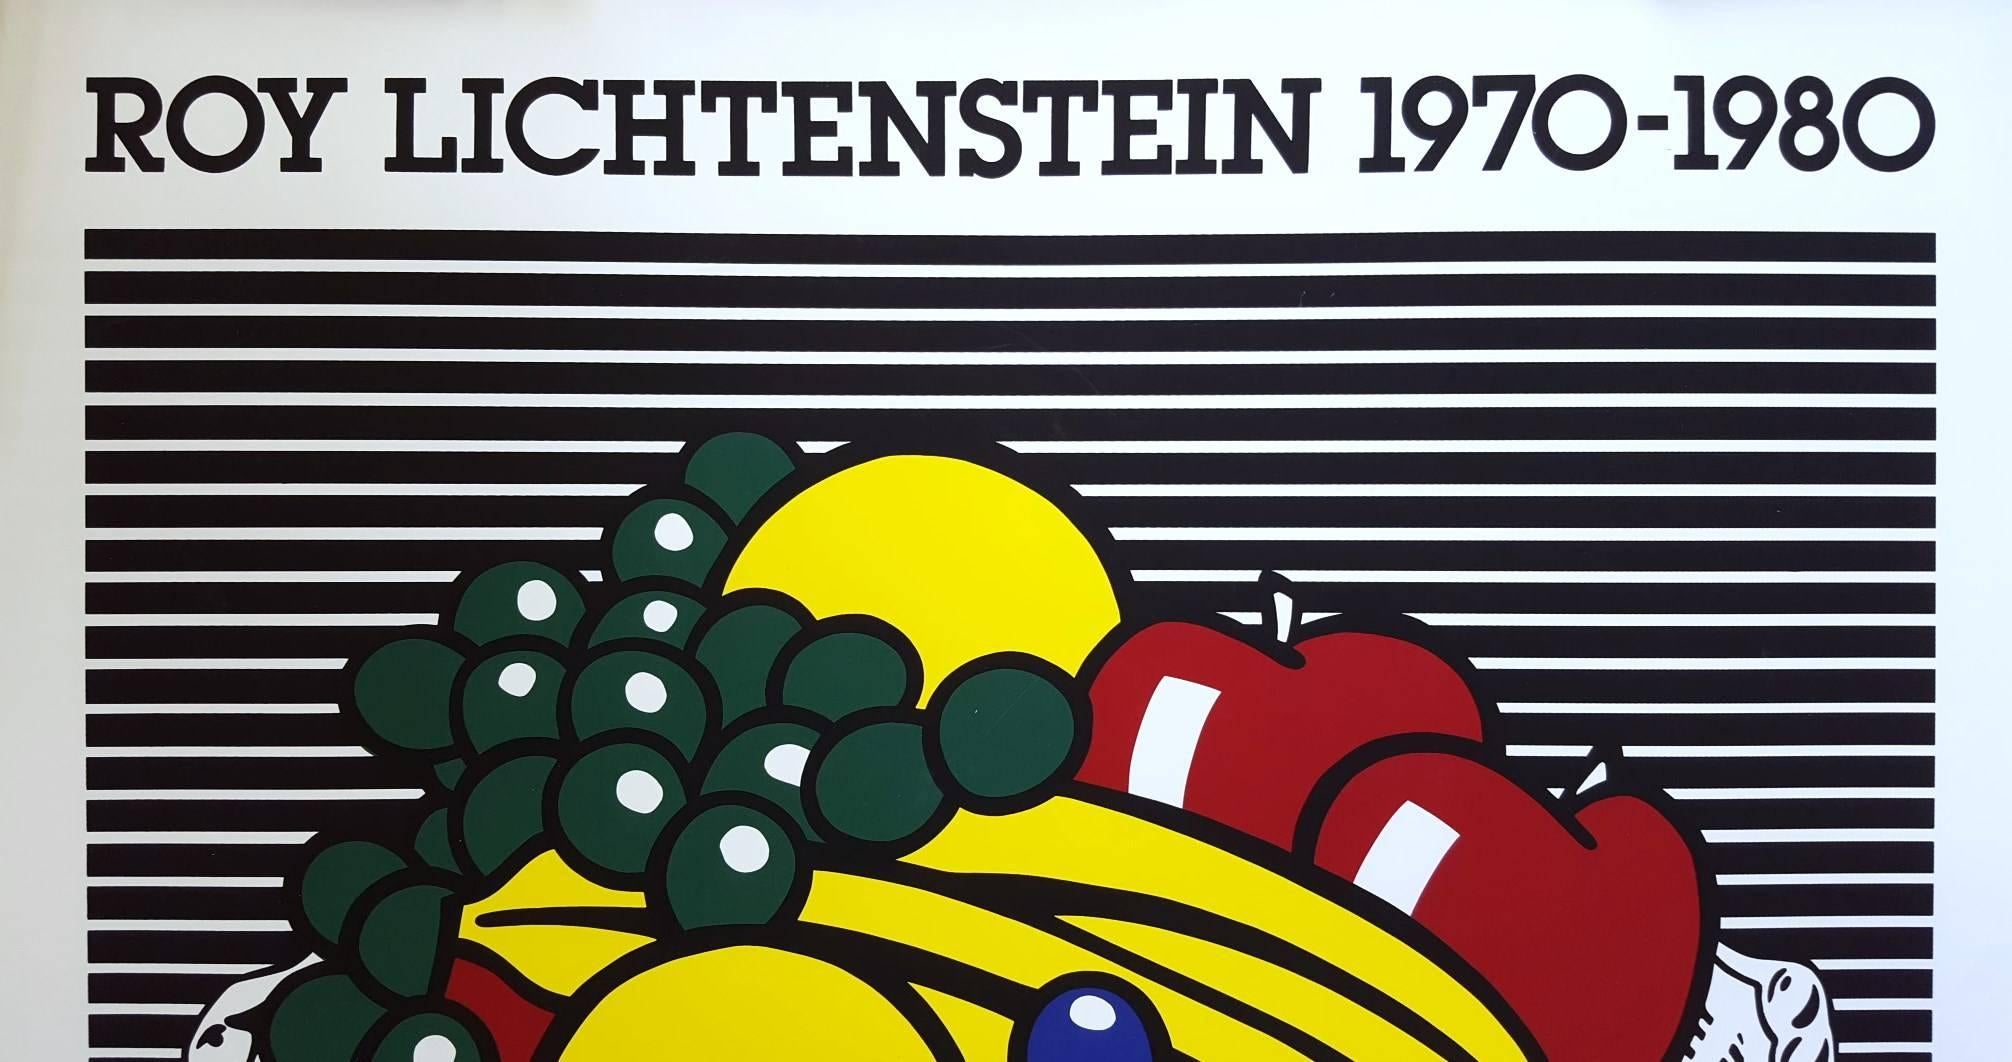 An authorized silkscreen exhibition poster after American artist Roy Lichtenstein (1923-1997) titled 